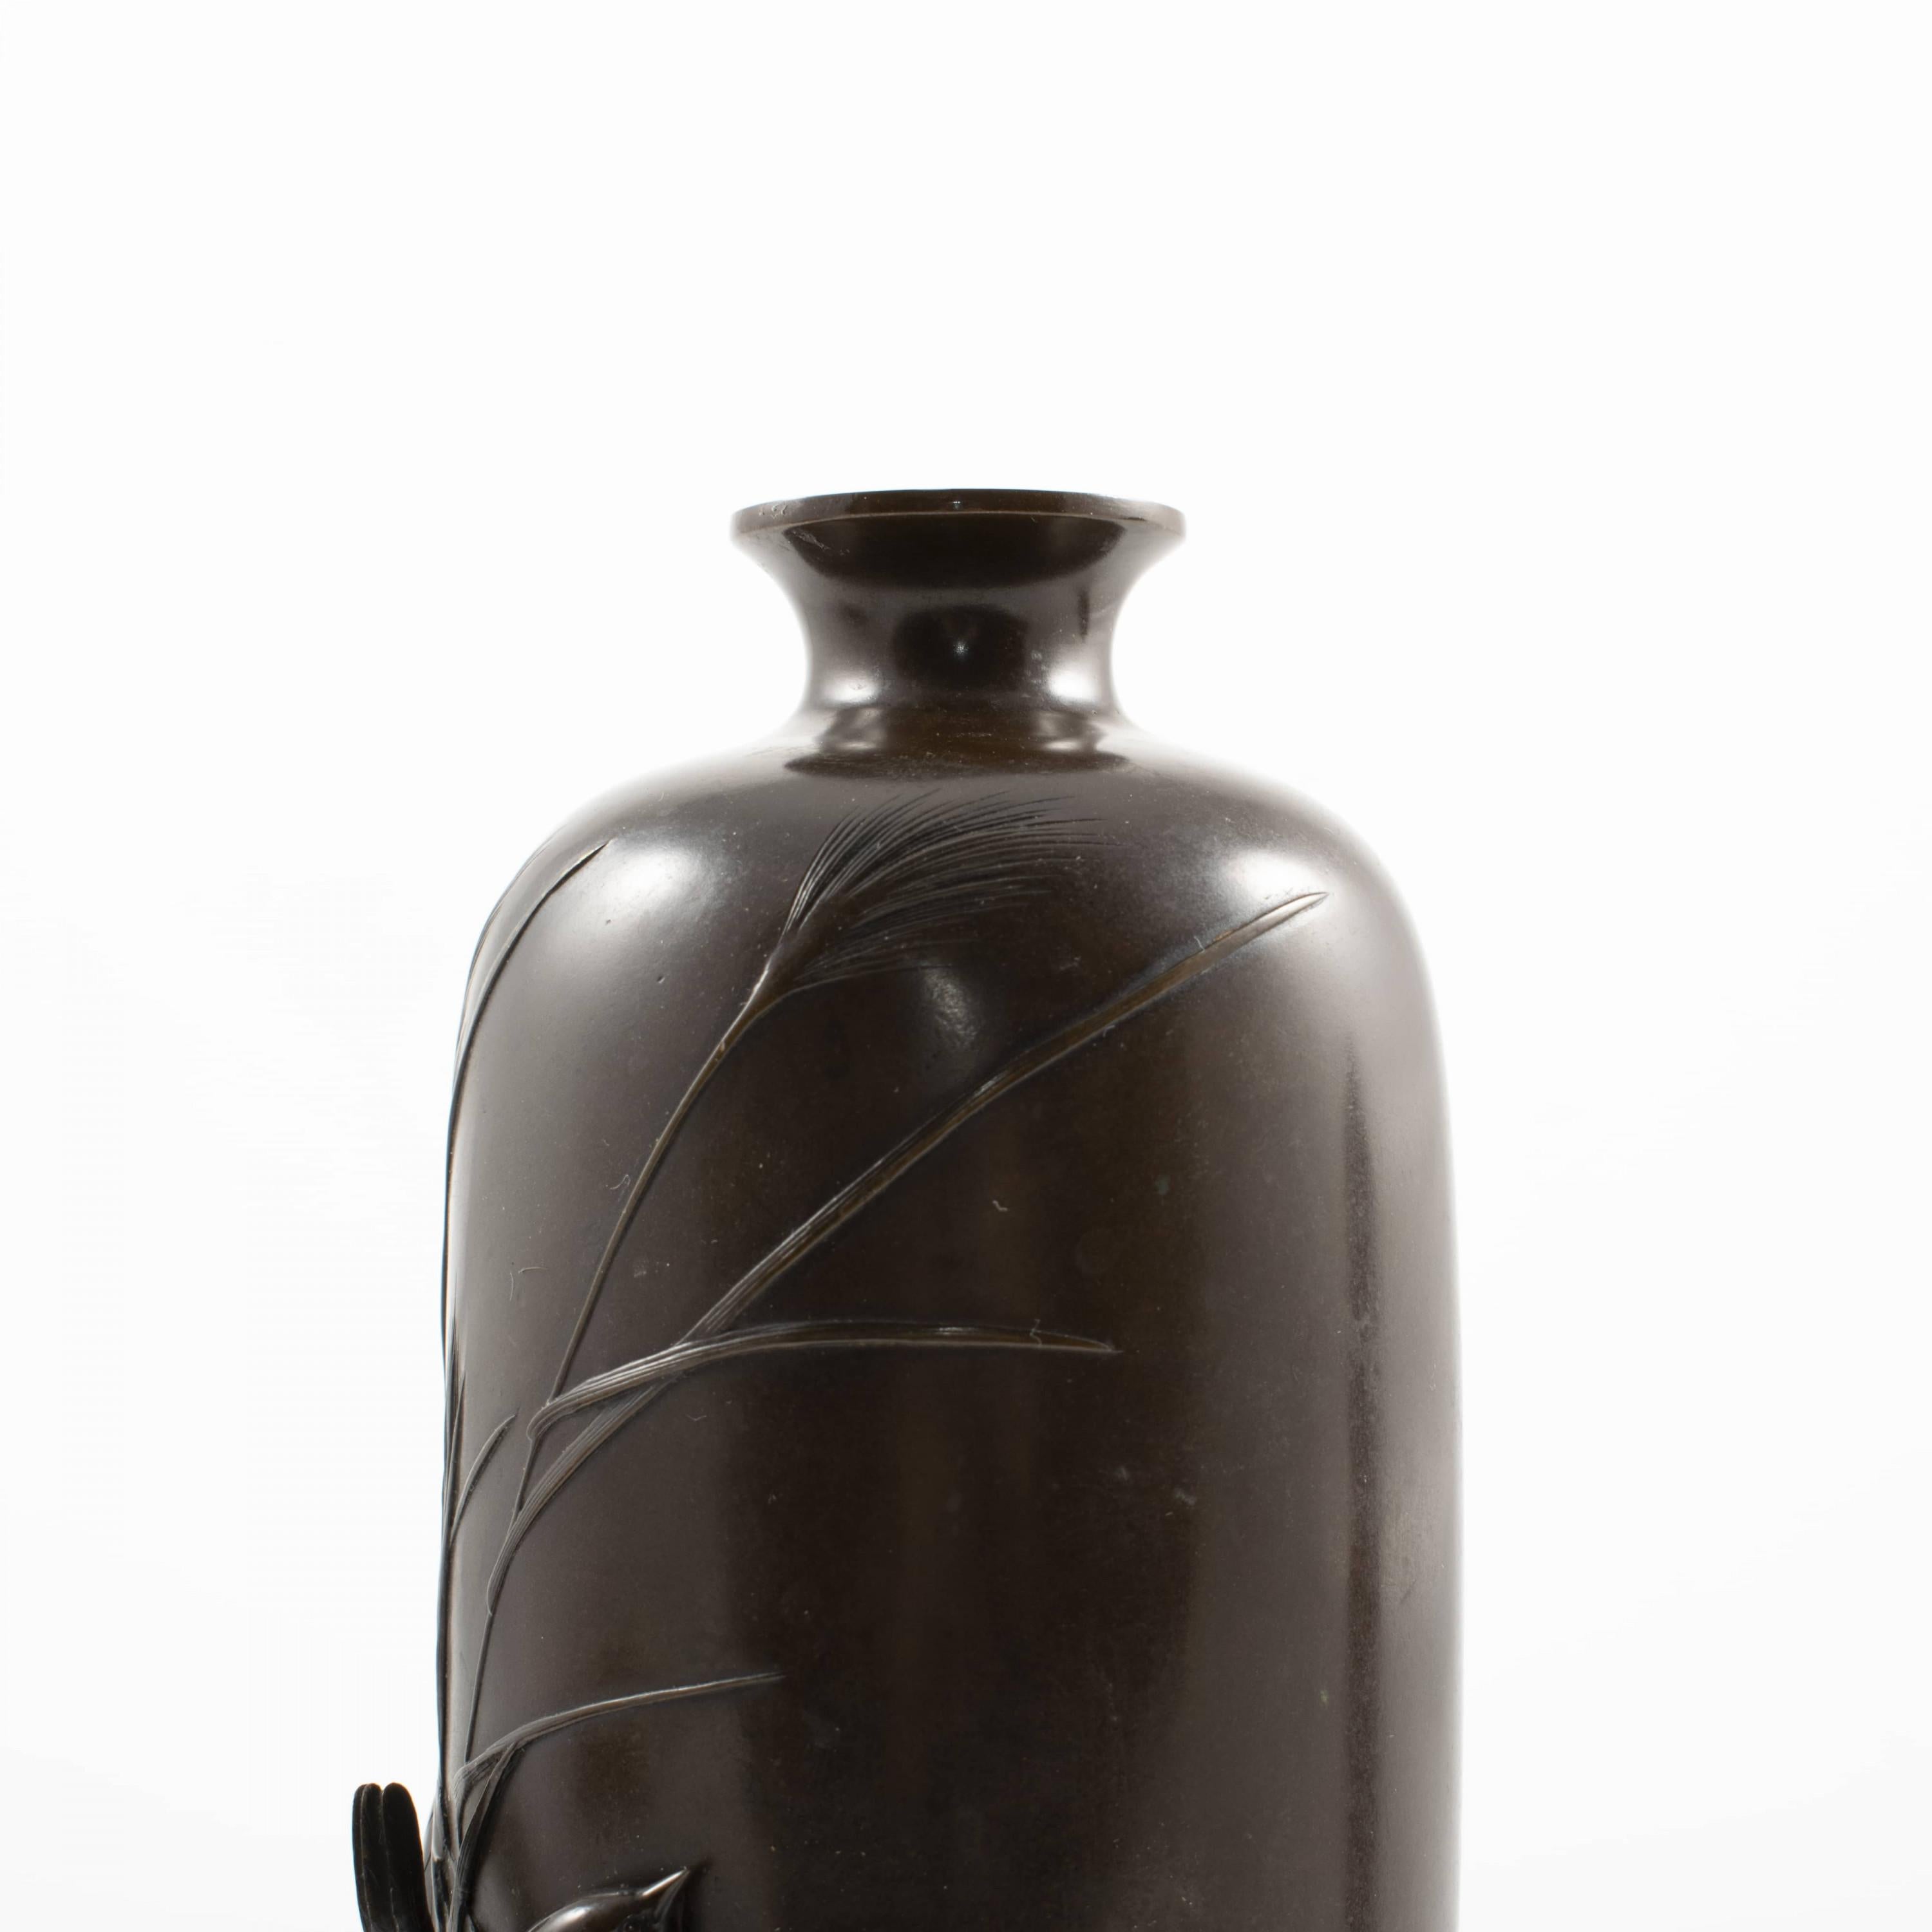 Pair of Japanese Meiji Bronze Vases 1